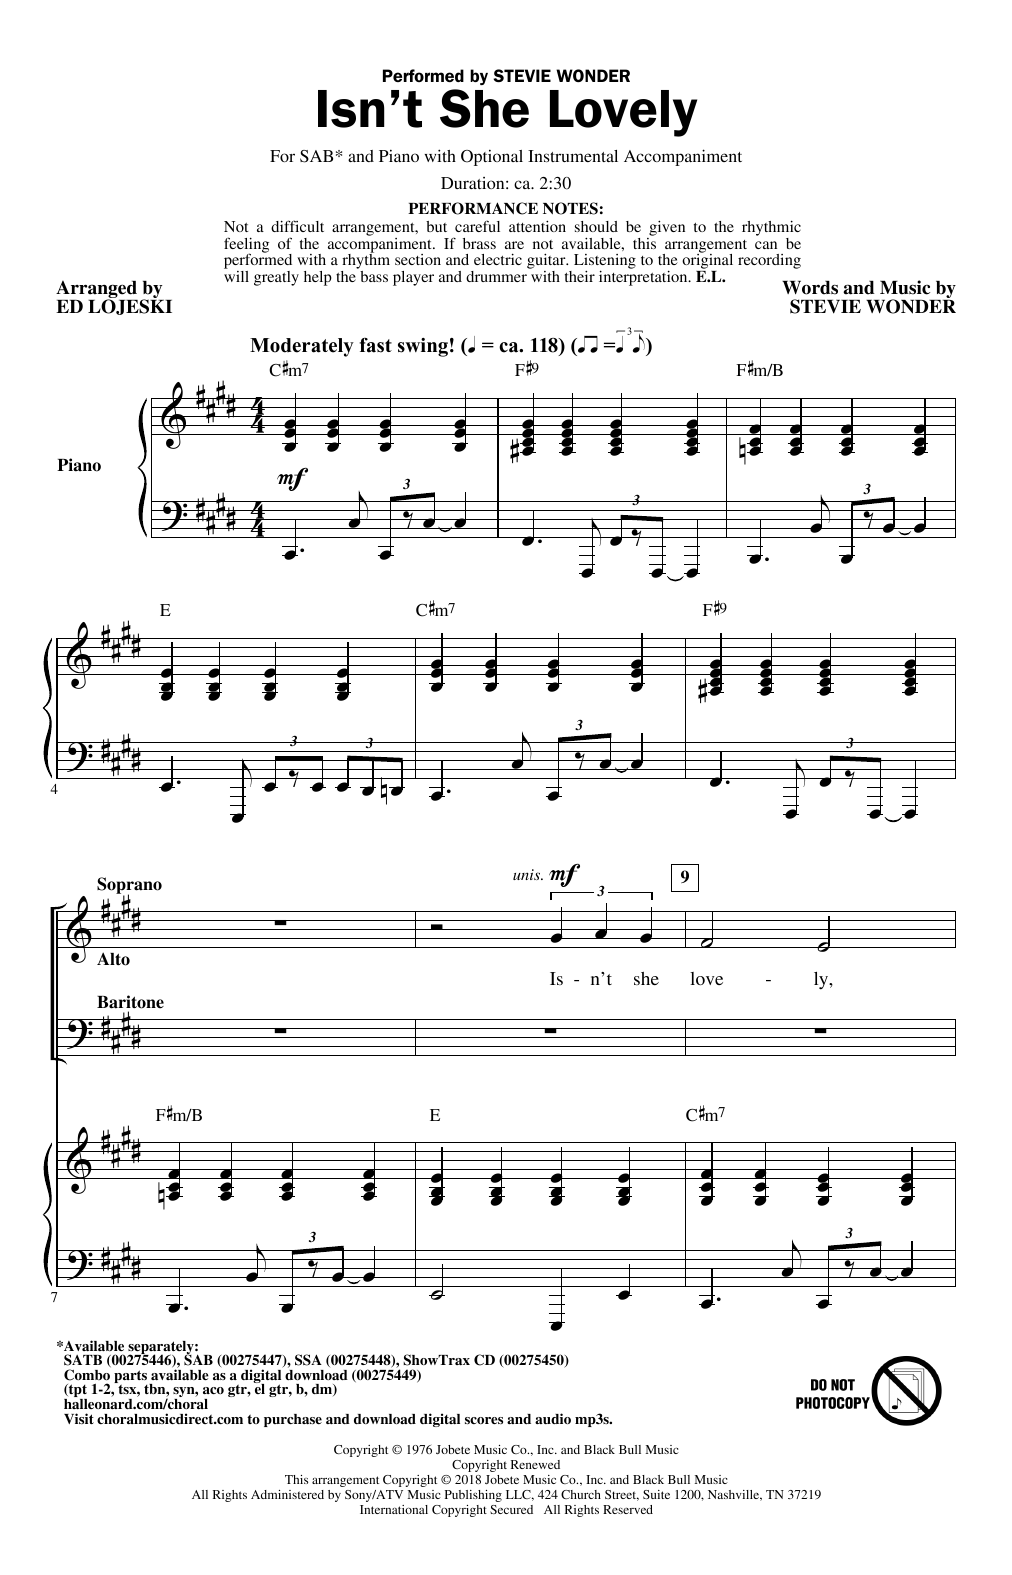 Stevie Wonder Isn't She Lovely (arr. Ed Lojeski) sheet music notes and chords arranged for SAB Choir